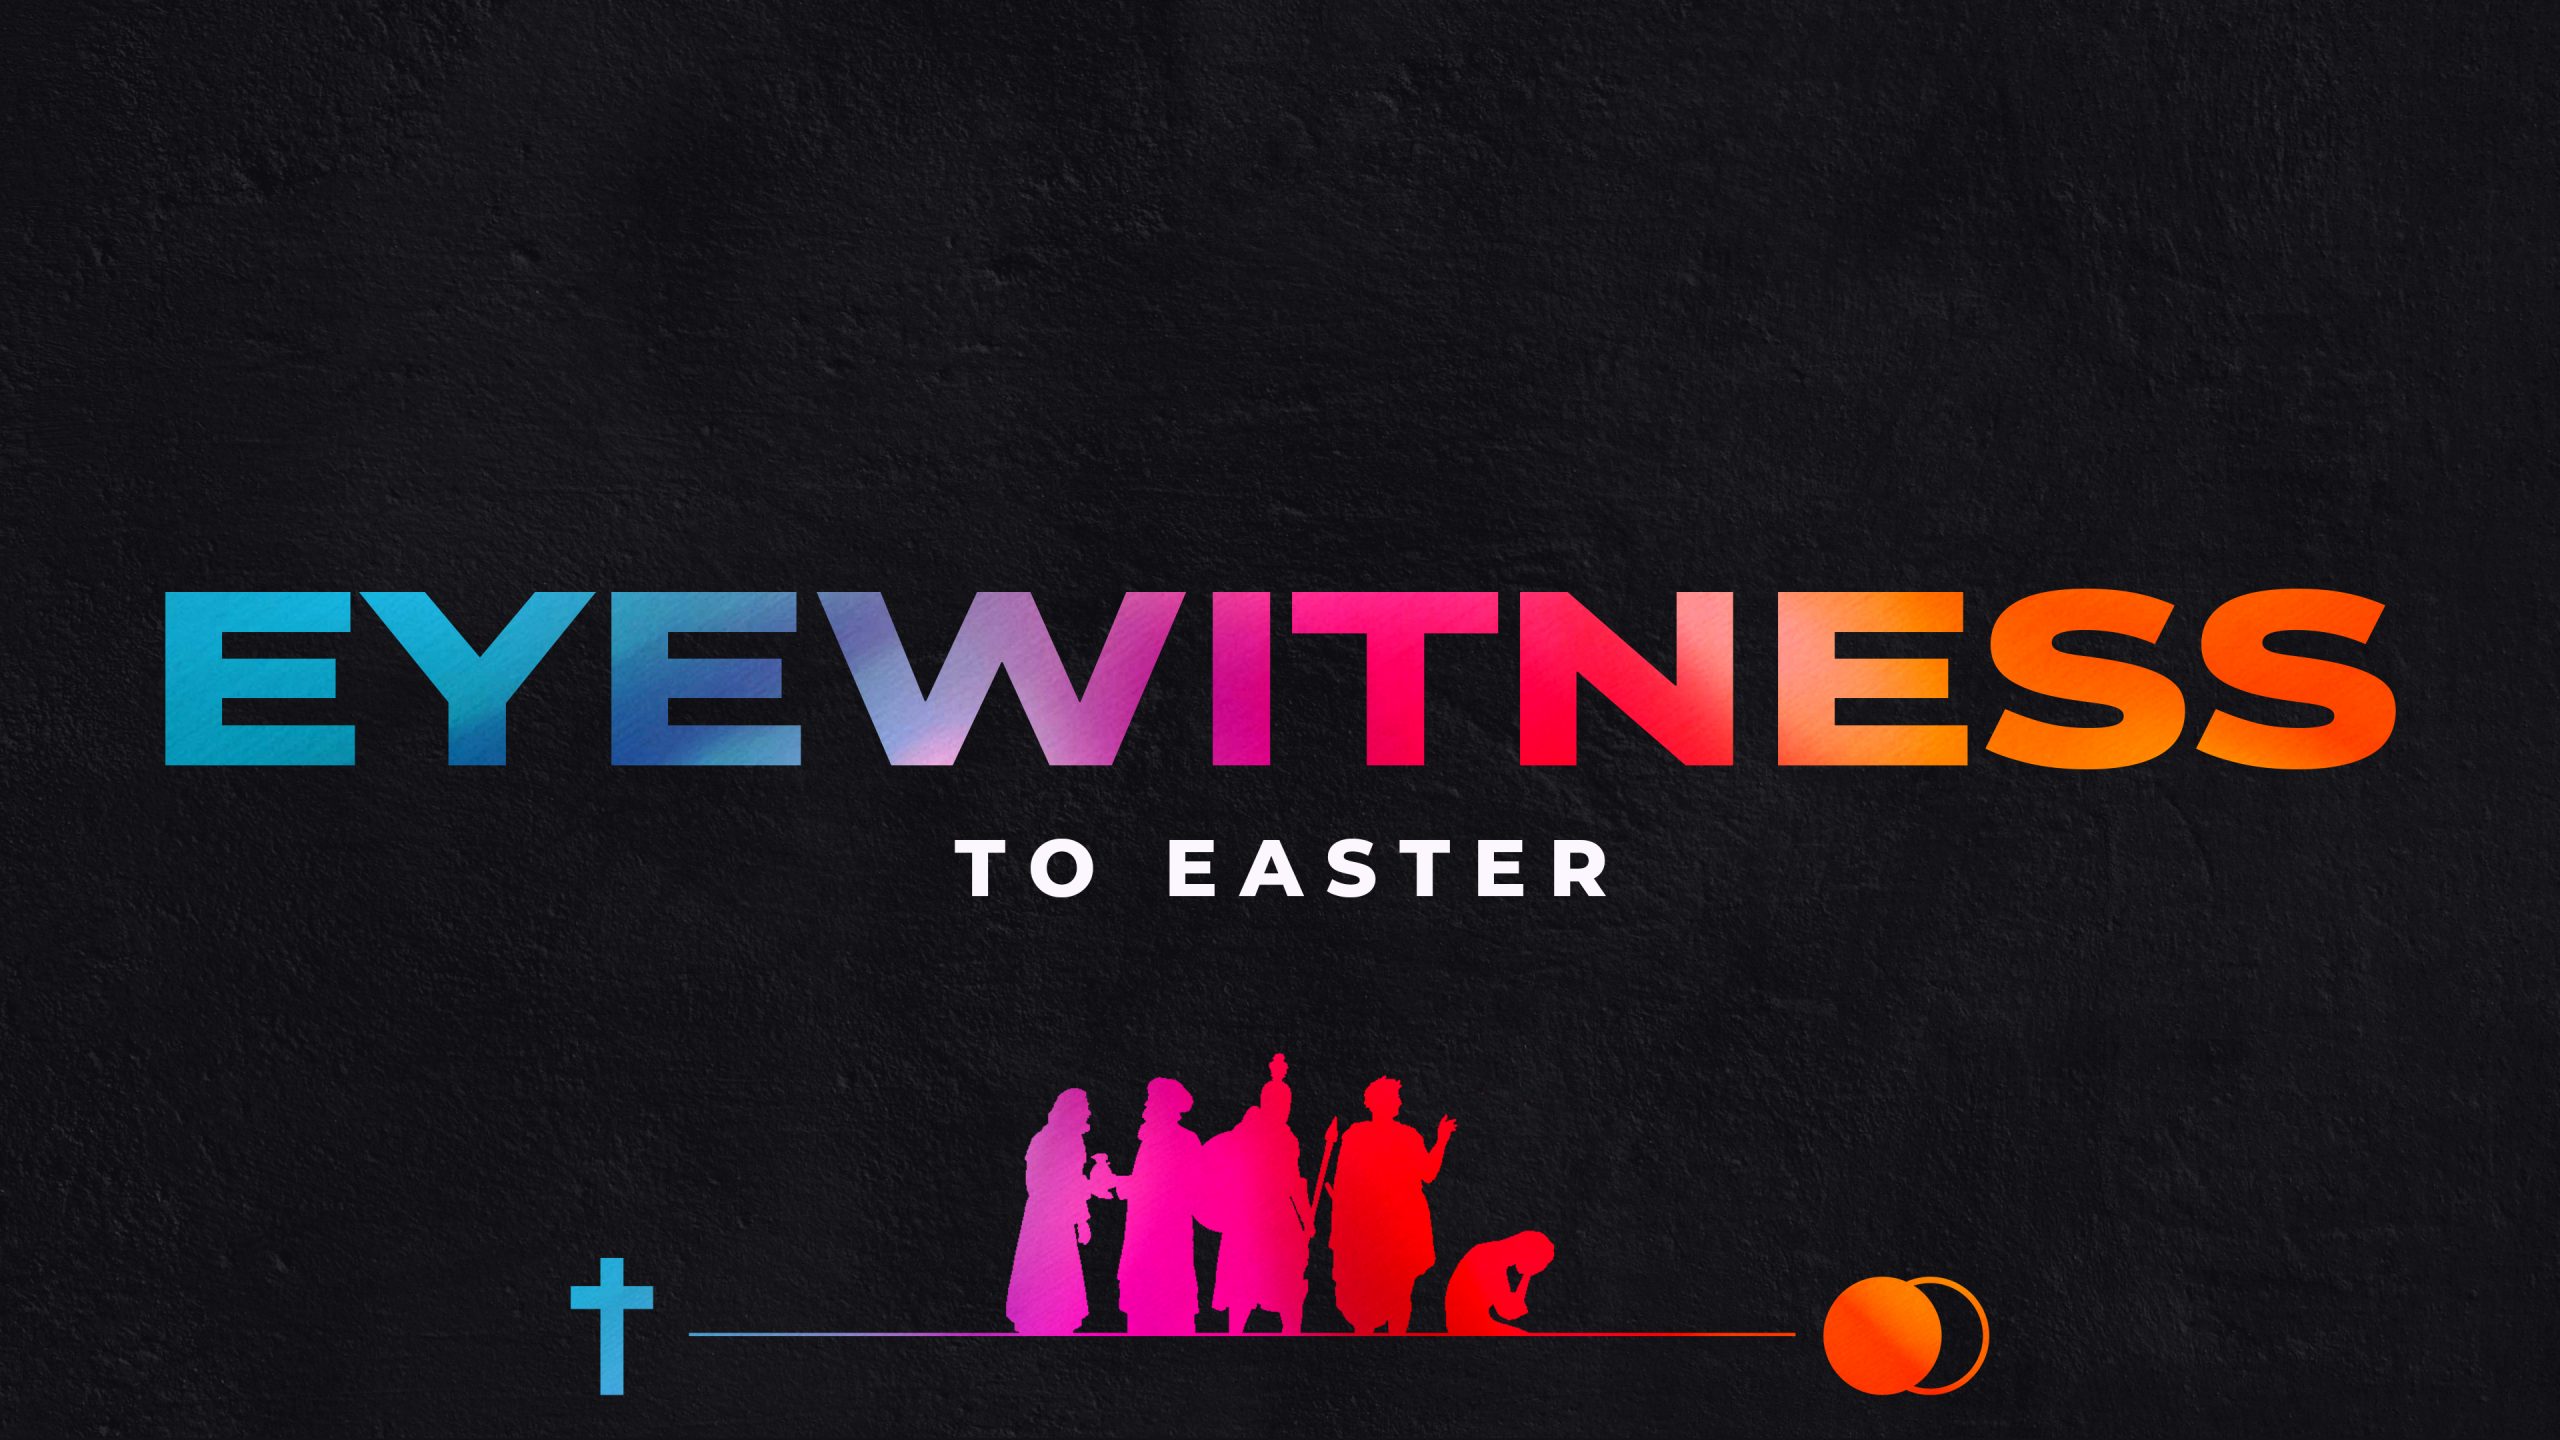 Eyewitness to Easter Pilate